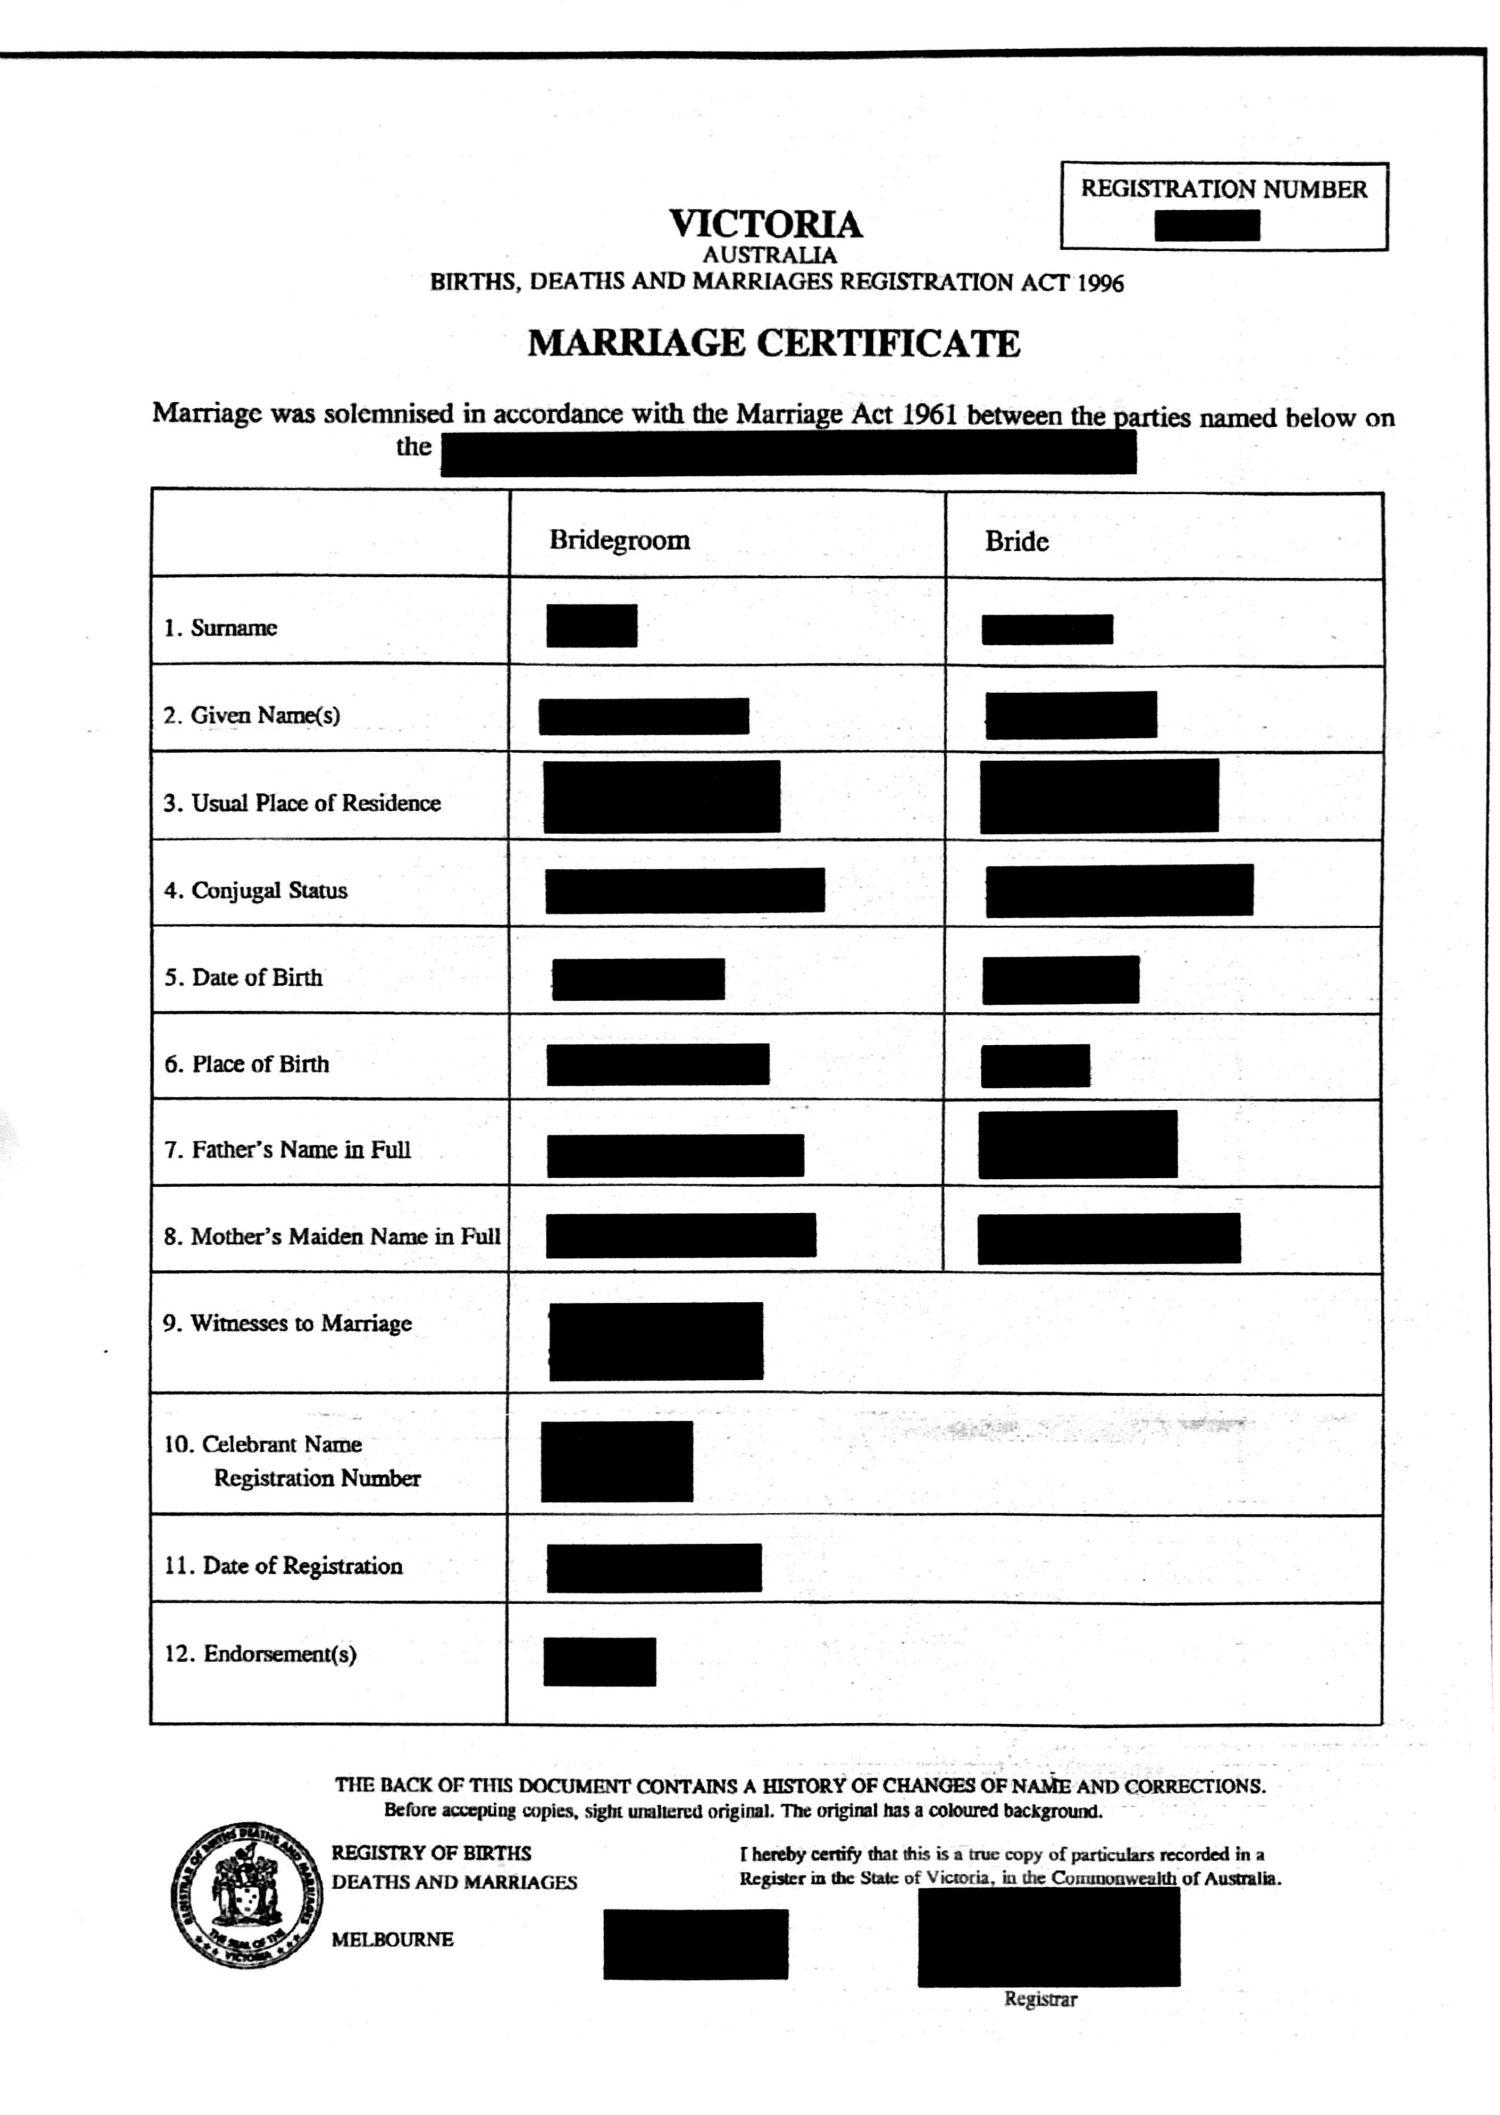 Marriage certificate translation into German - English & Spanish